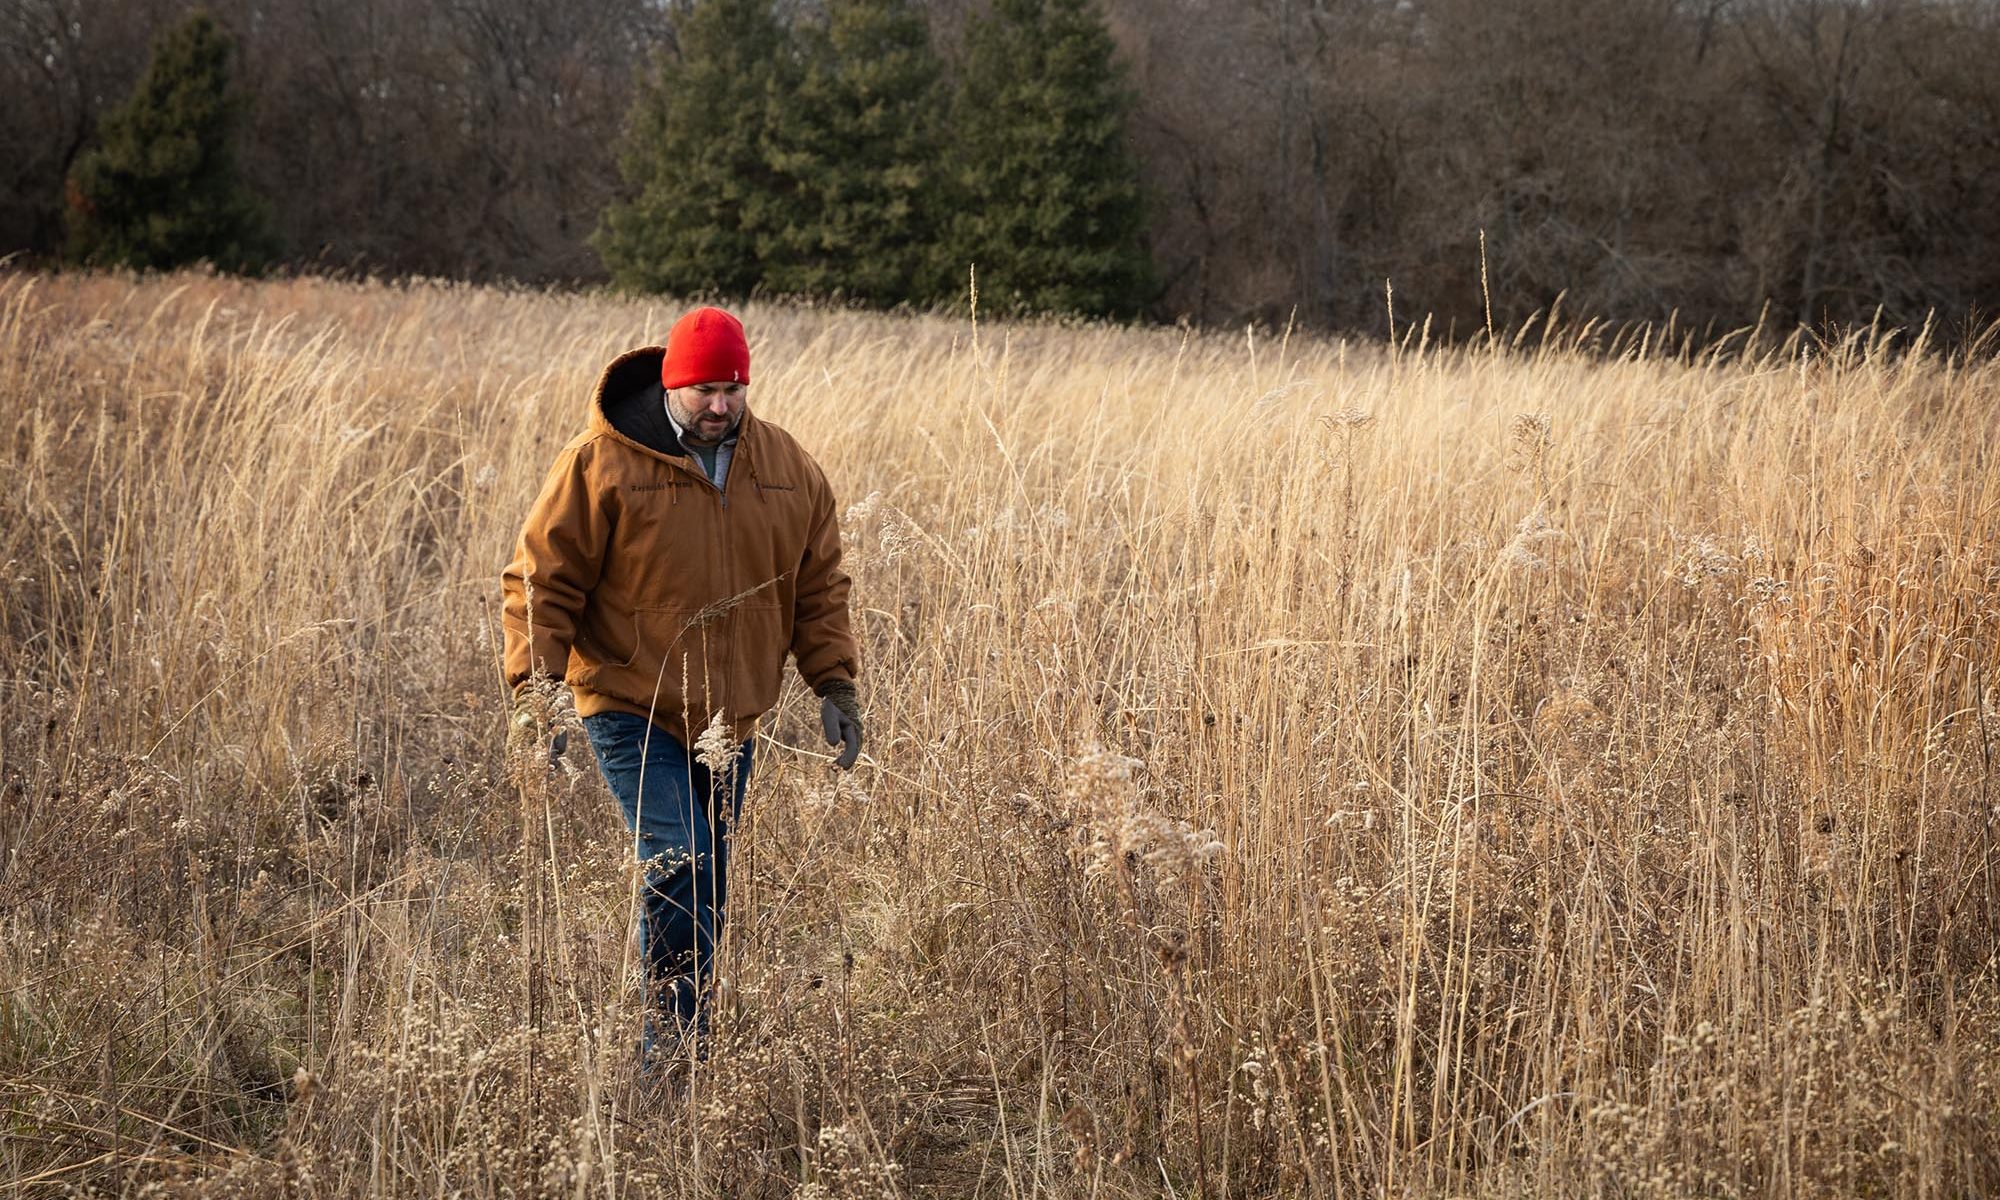 Kris Reynolds wearing red hat and light brown jacket walking in autumnal hued grass.